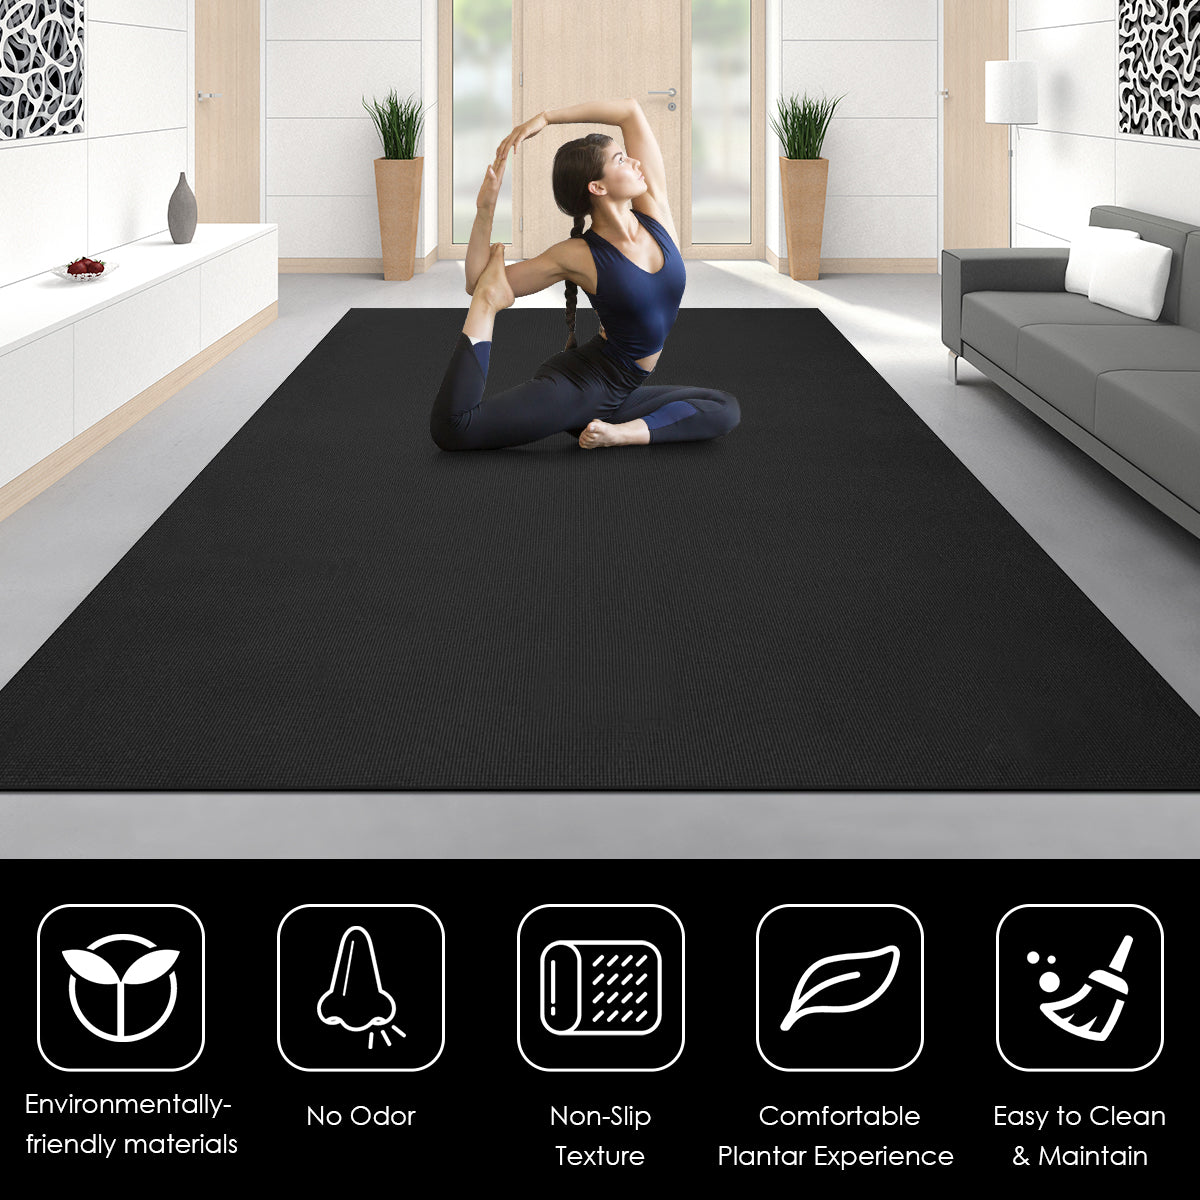 Yoga Mat, Non Slip Yoga Mat, Thick Exercise Mat, Double-Sided Non